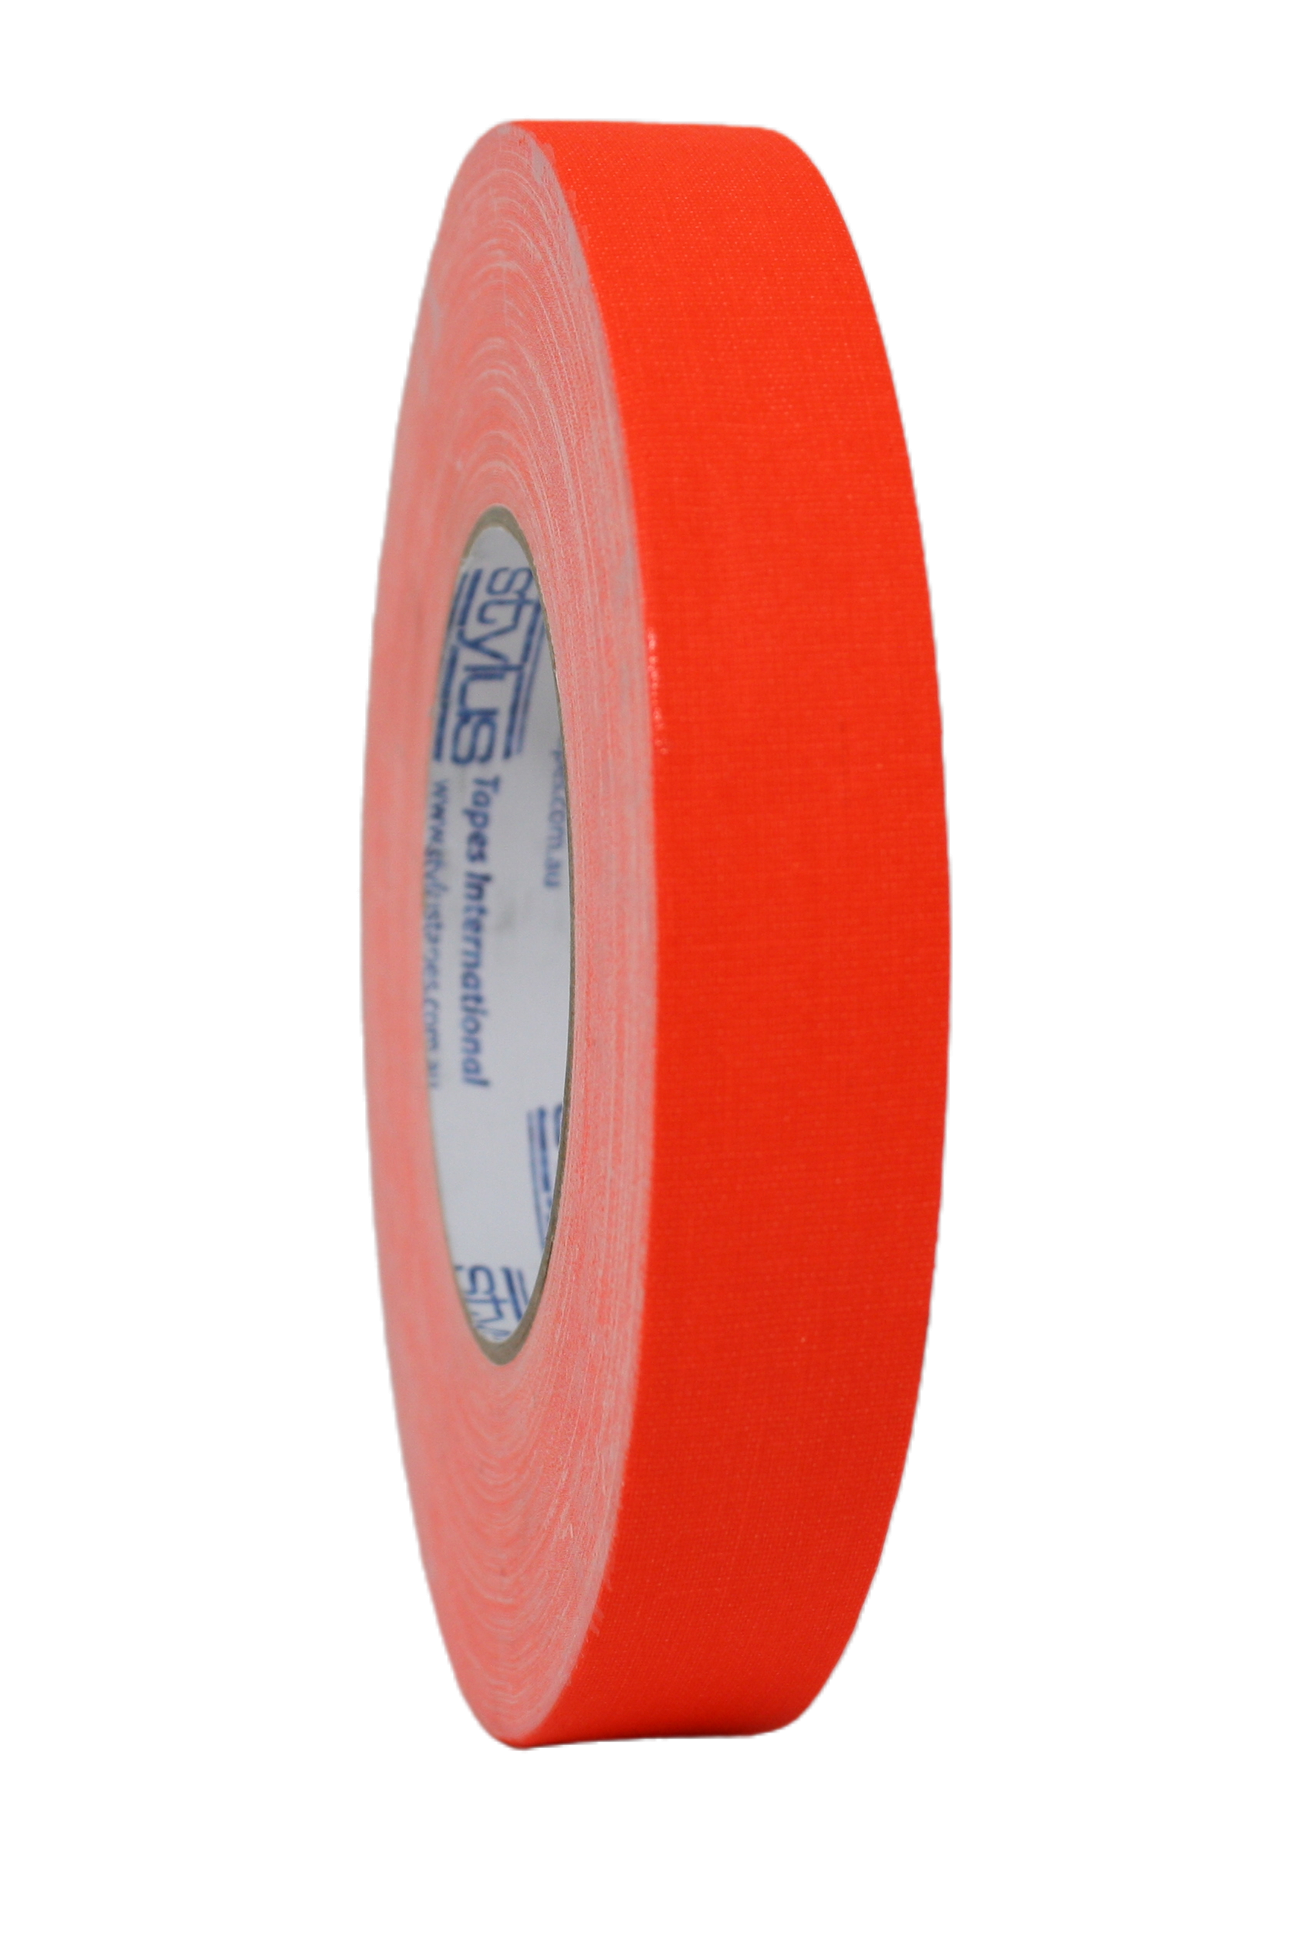 Styluss Fluorescent Gaffer Tape, 1" Orange, side view